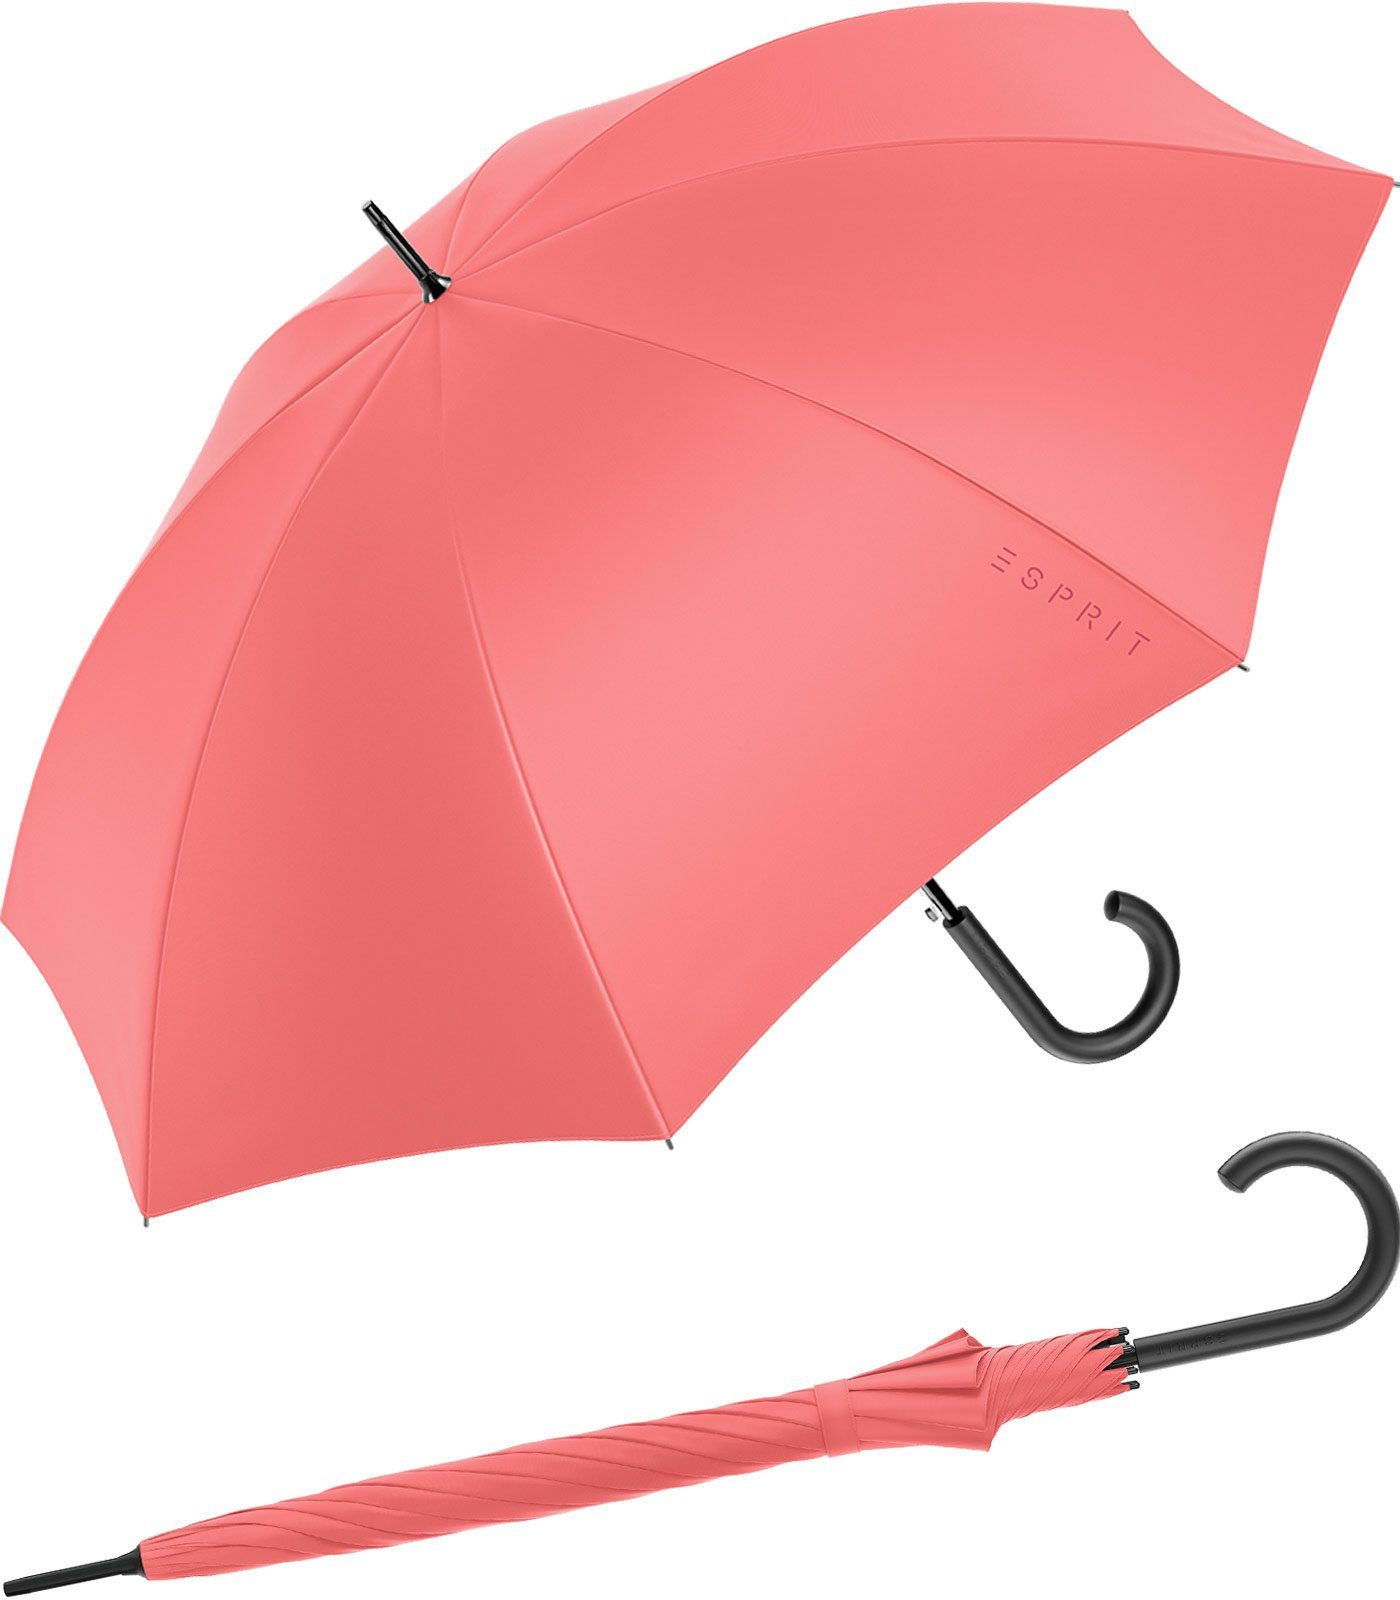 Esprit Langregenschirm Damen-Regenschirm mit den koralle stabil, 2023, Automatik und groß FJ Trendfarben in